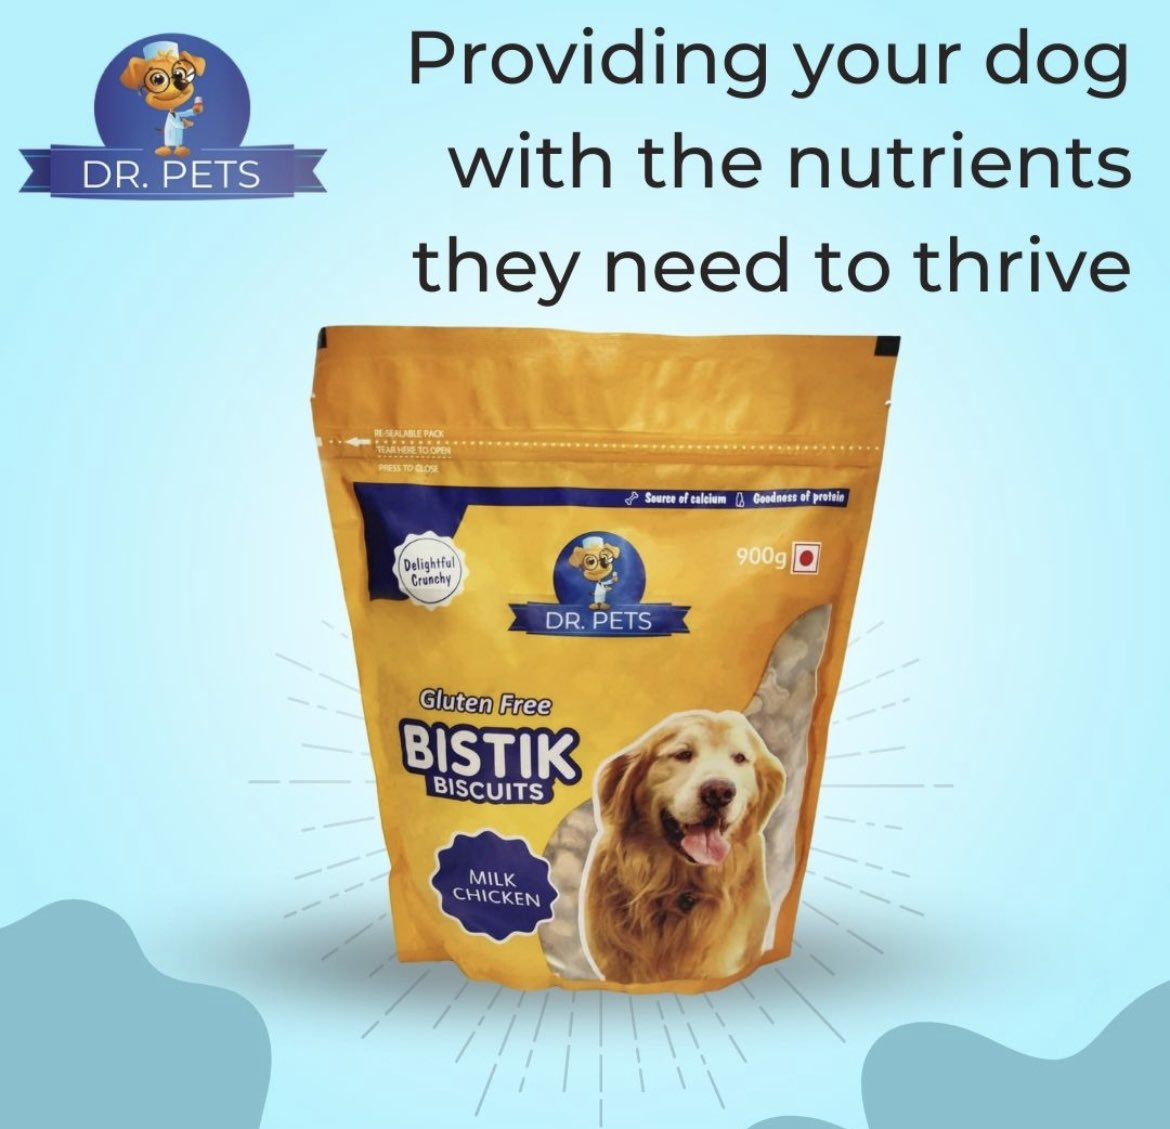 Dr.pets gluten free Bistik biscuits 
#dogs #doggo #love #dog #Drpets #dogfood #diet #pets #doglover #animallover #happydog #healthydog #instadogs #petcare #instadogs